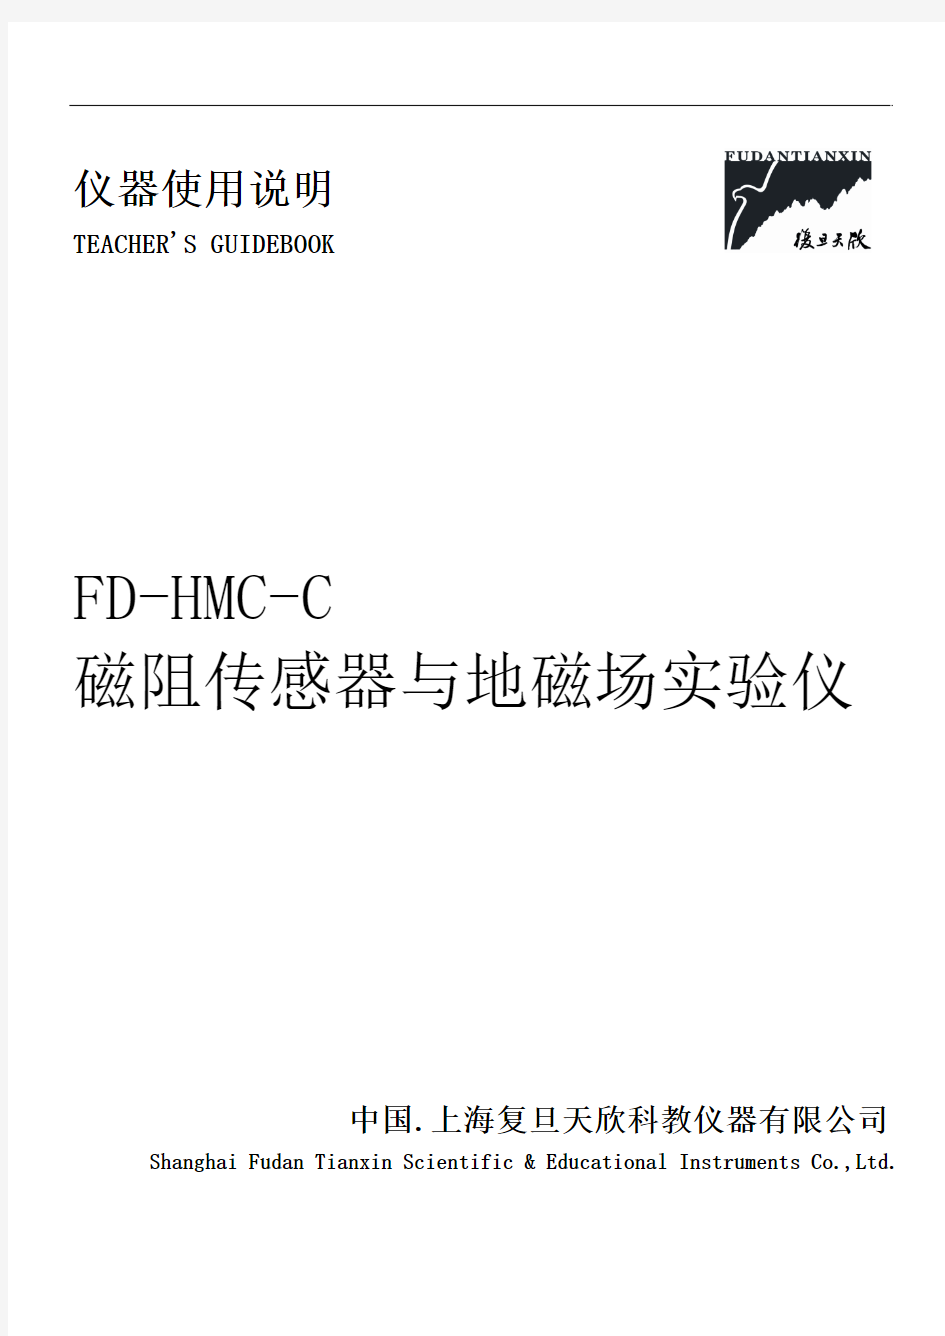 FD-HMC-C型磁阻传感器与地磁场实验仪说明书(100601修订)